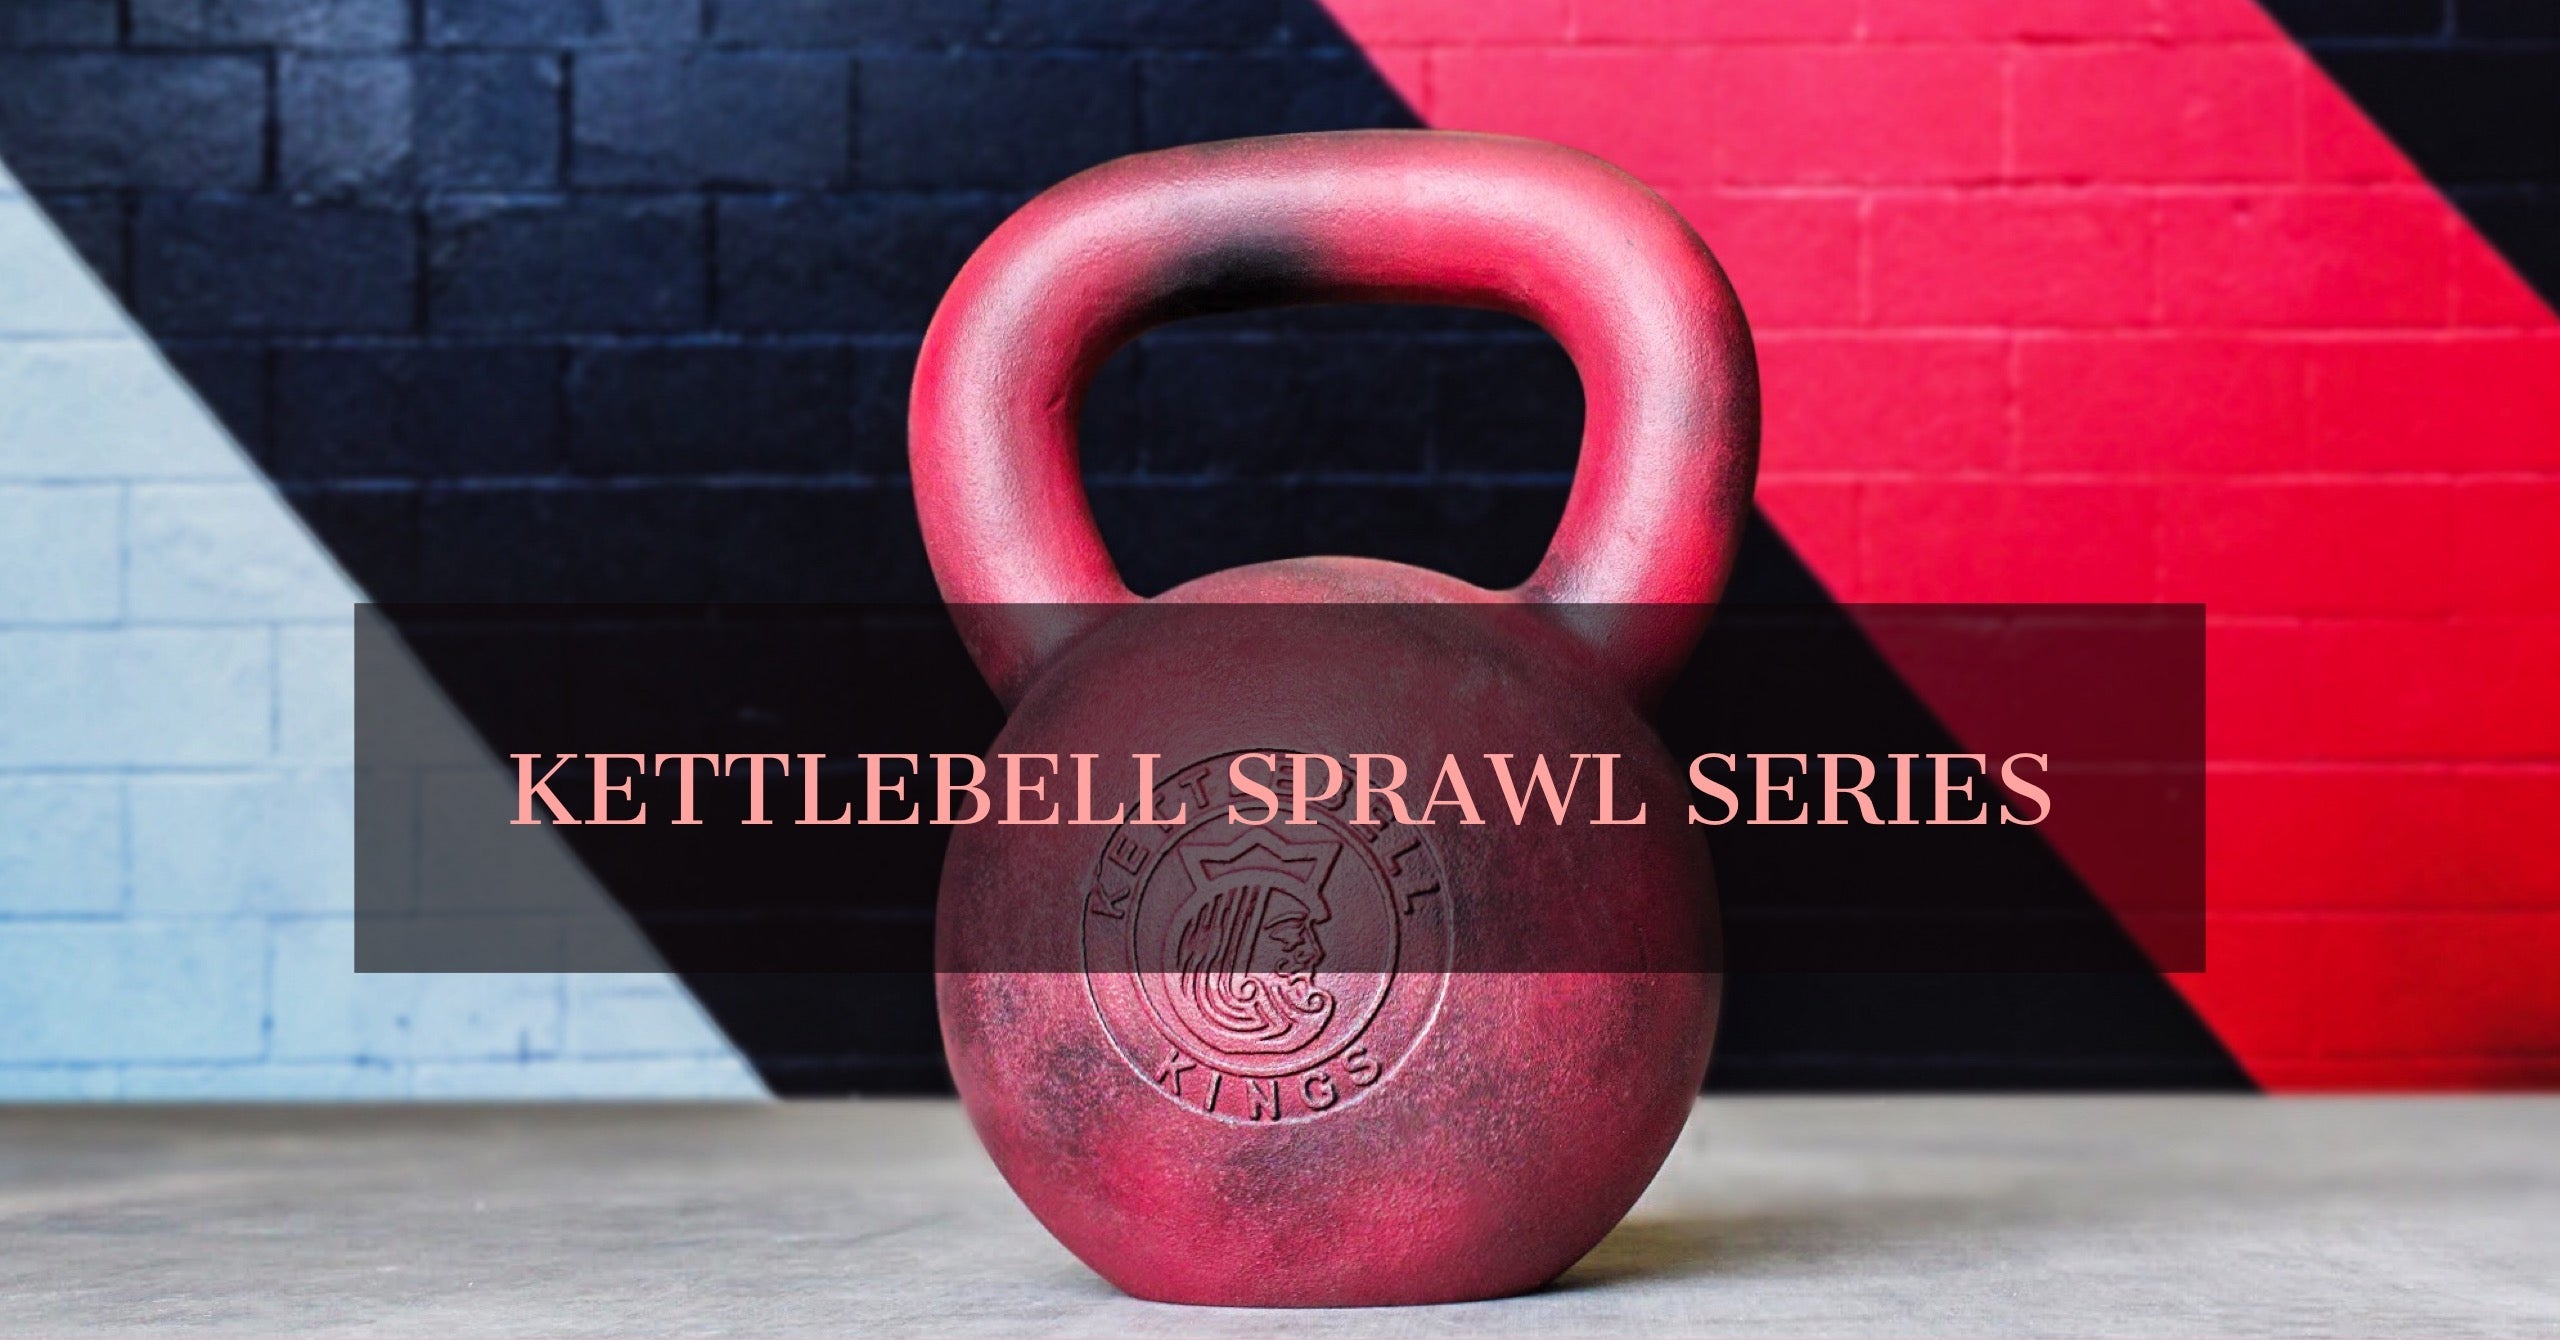 Kettlebell Sprawl Series